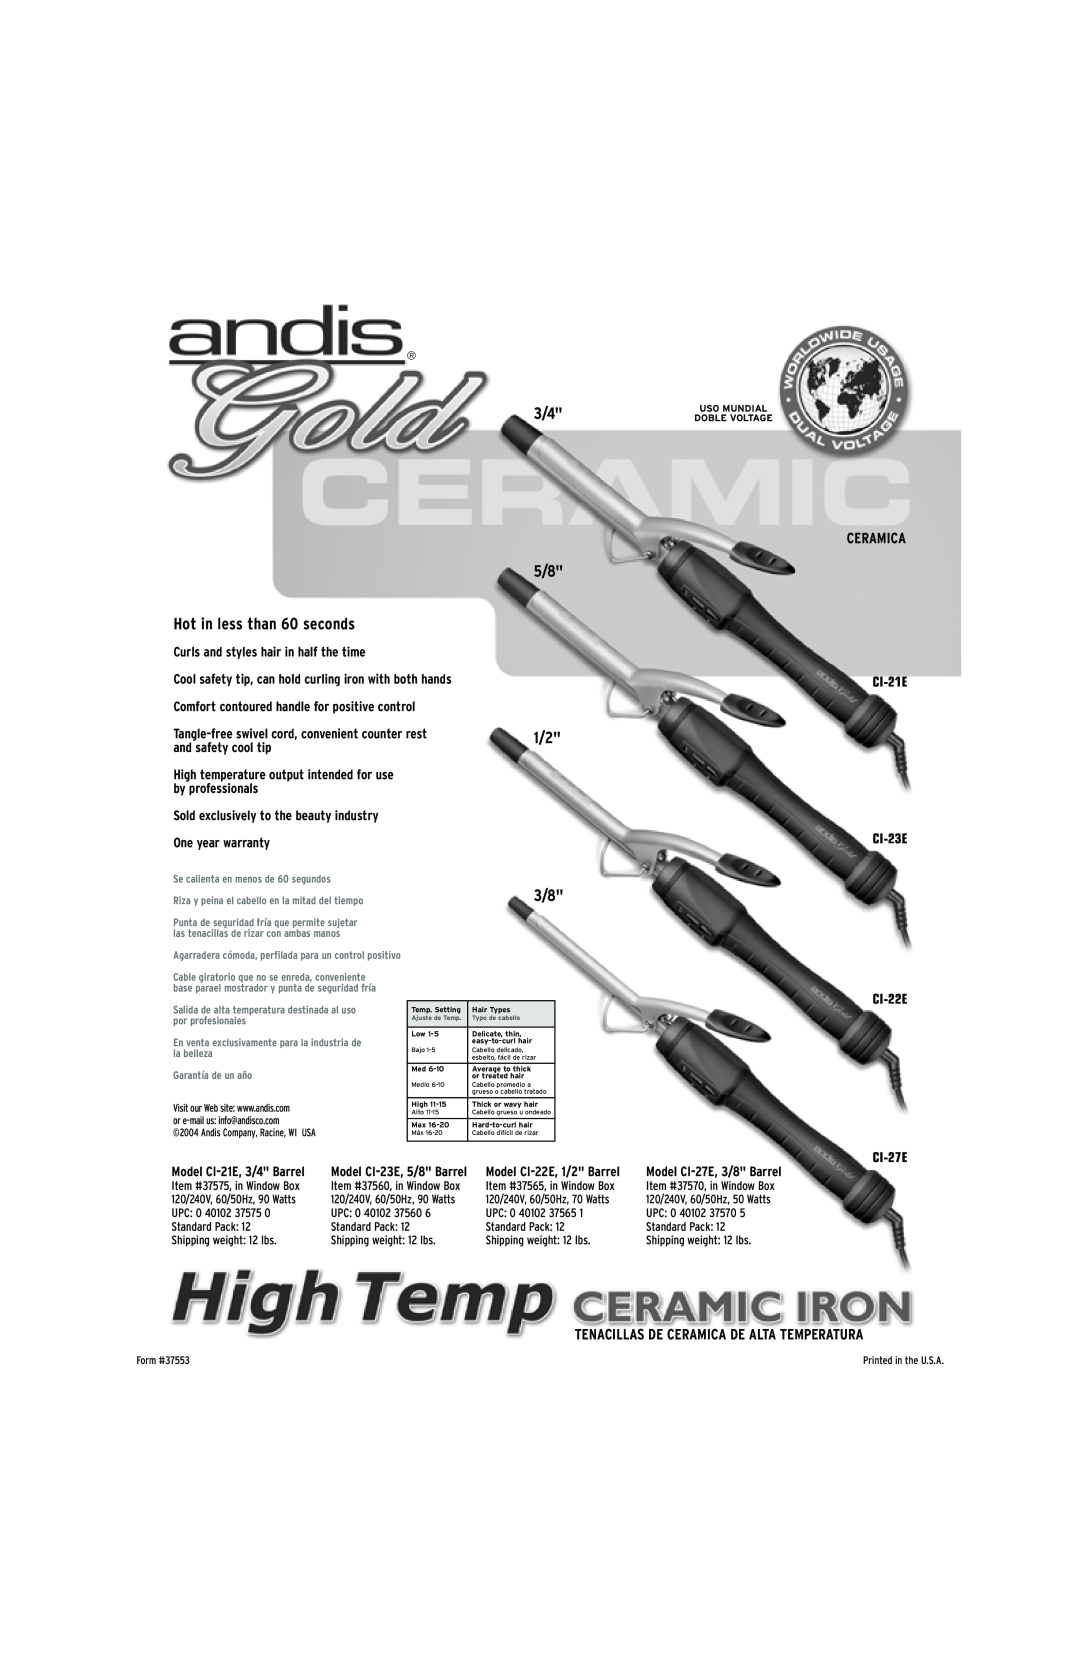 Andis Company CI-22E Hot in less than 60 seconds, Tenacillas De Ceramica De Alta Temperatura, and safety cool tip 